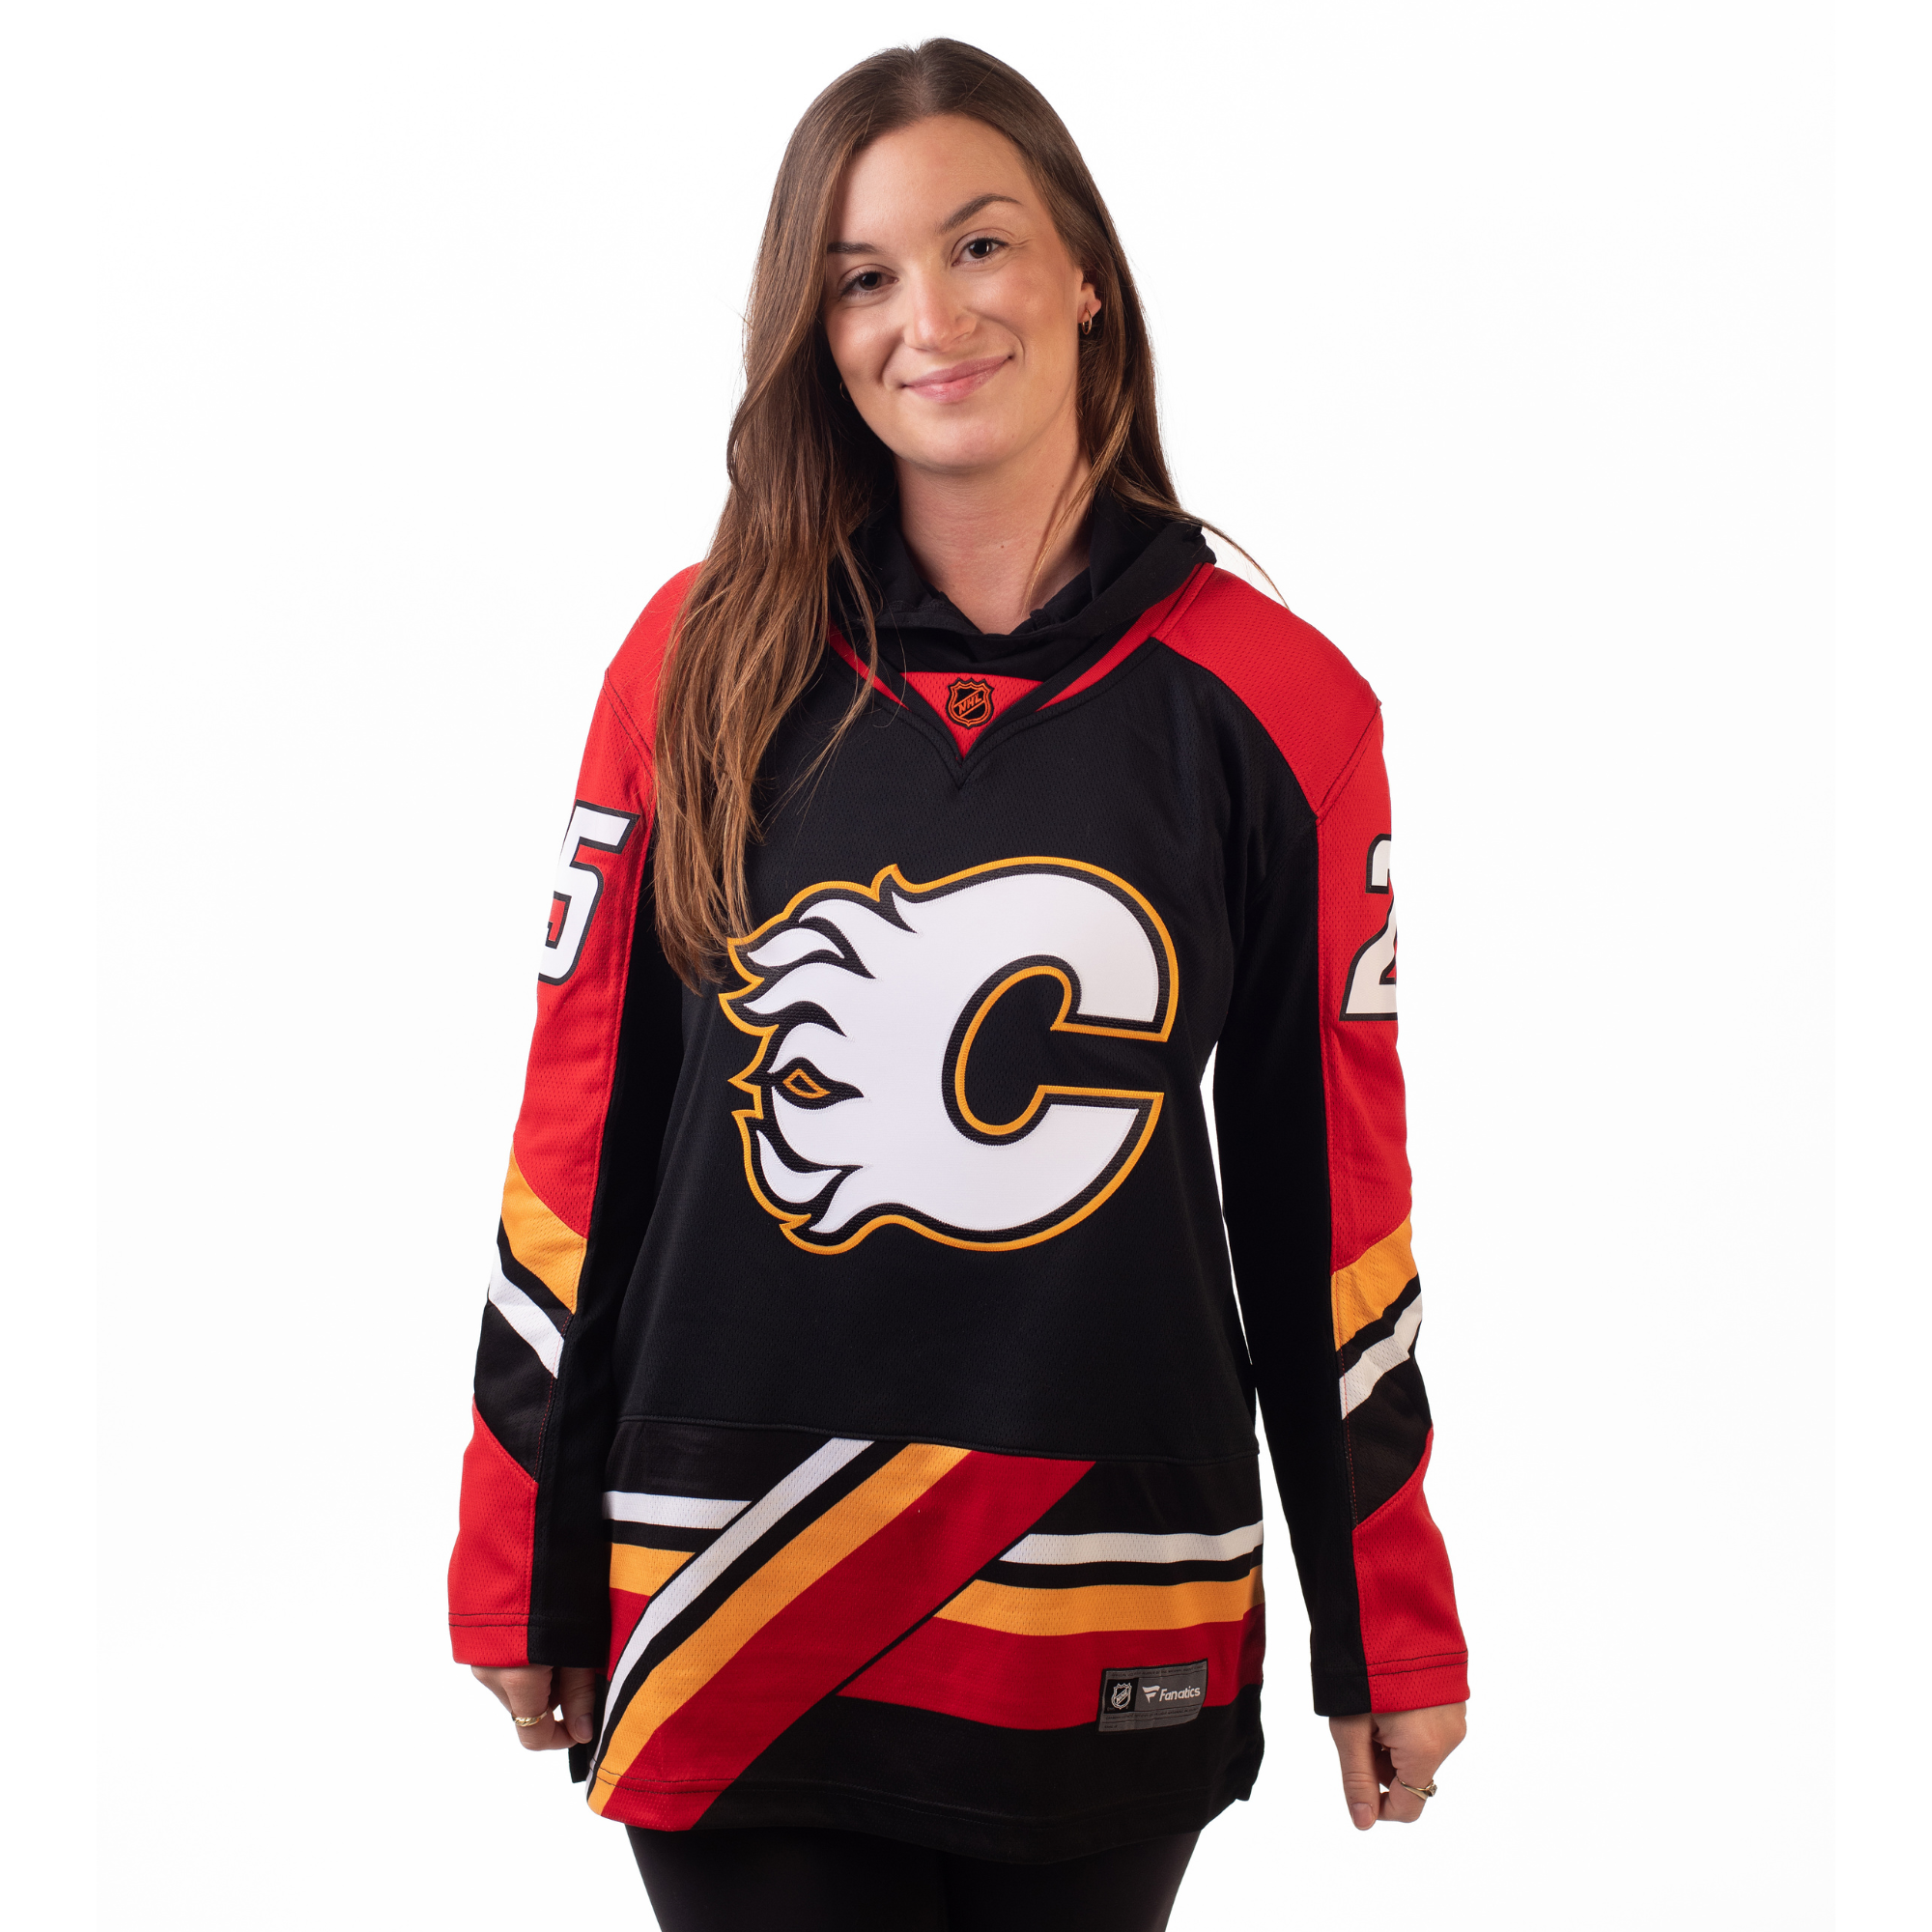 Calgary Flames Fanatics Branded Women's Home Breakaway Custom Jersey - Red